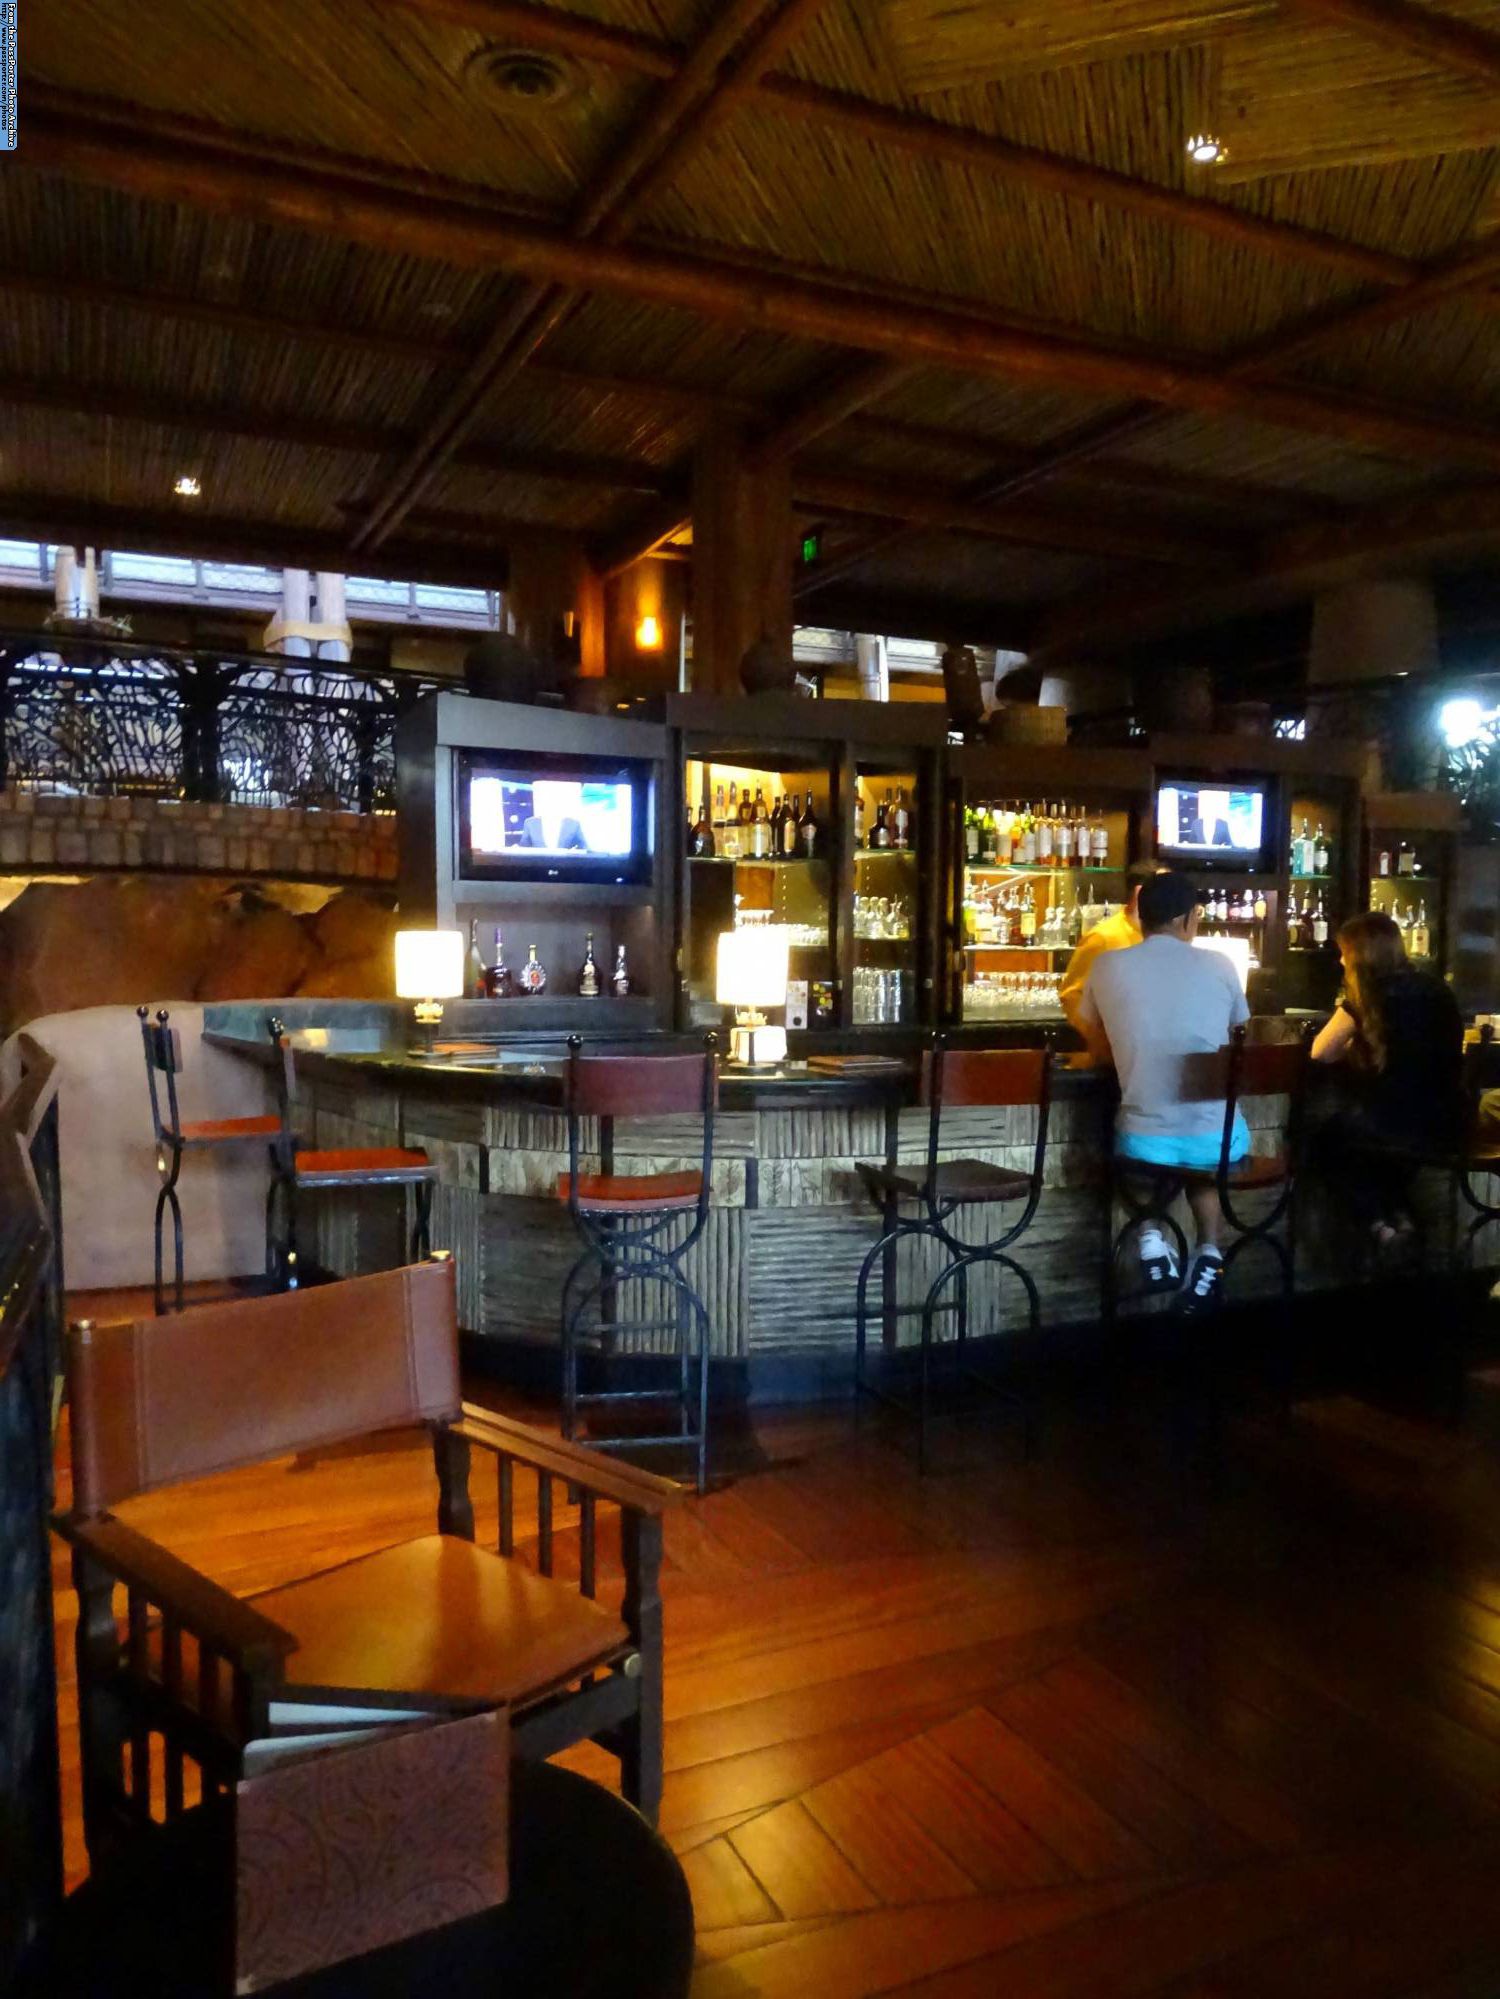 Victoria Falls Lounge